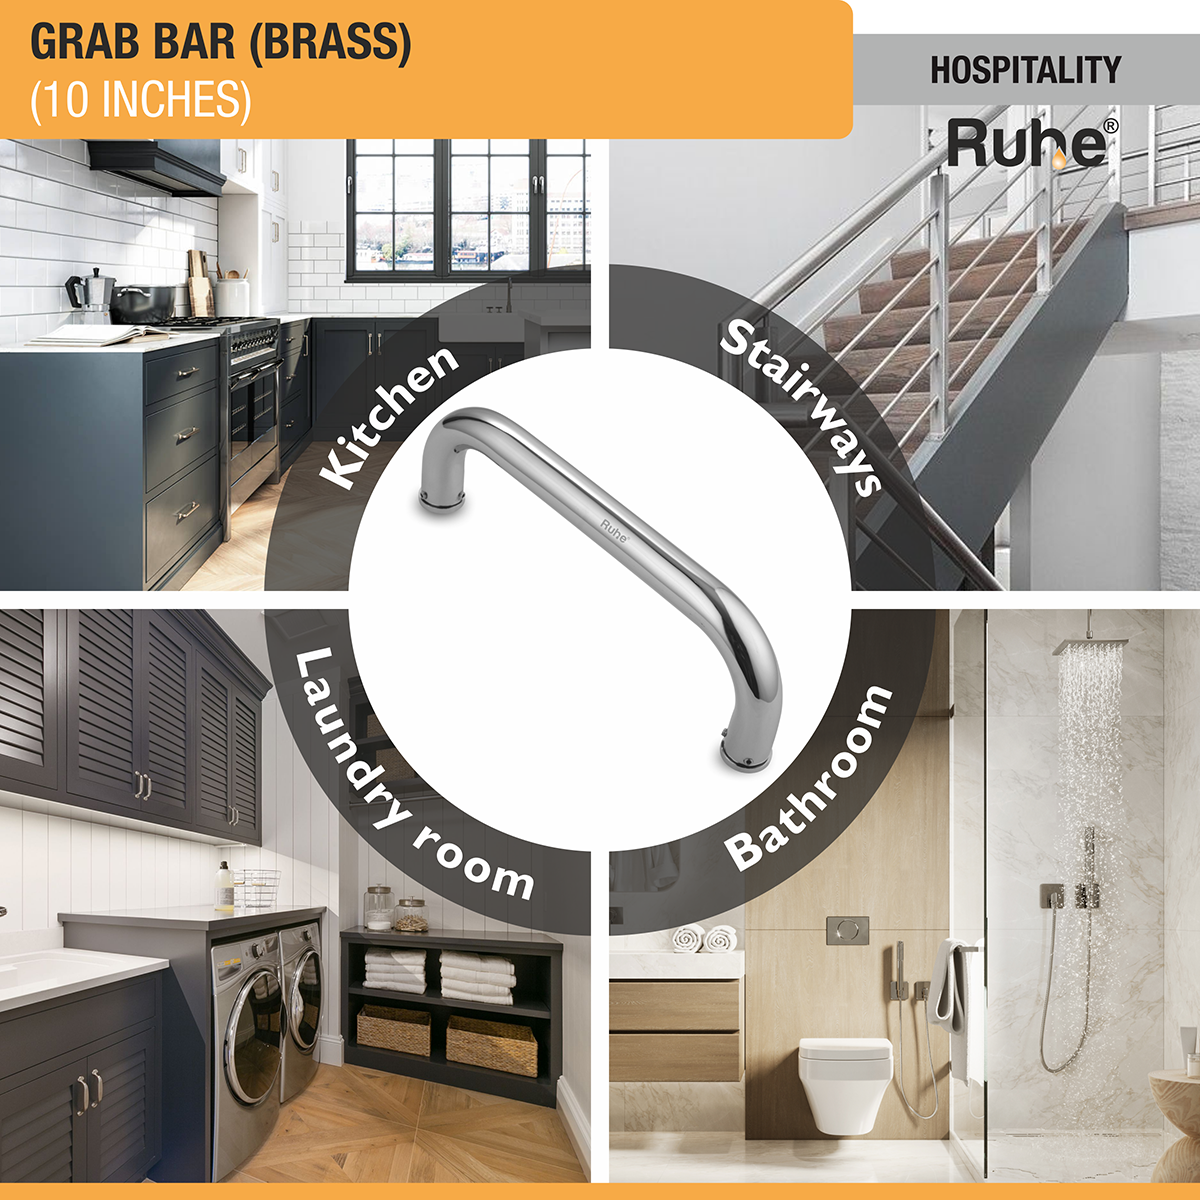 Brass Grab Bar (10 inches) for kitchen, laundry room, bathroom, washroom, stairways